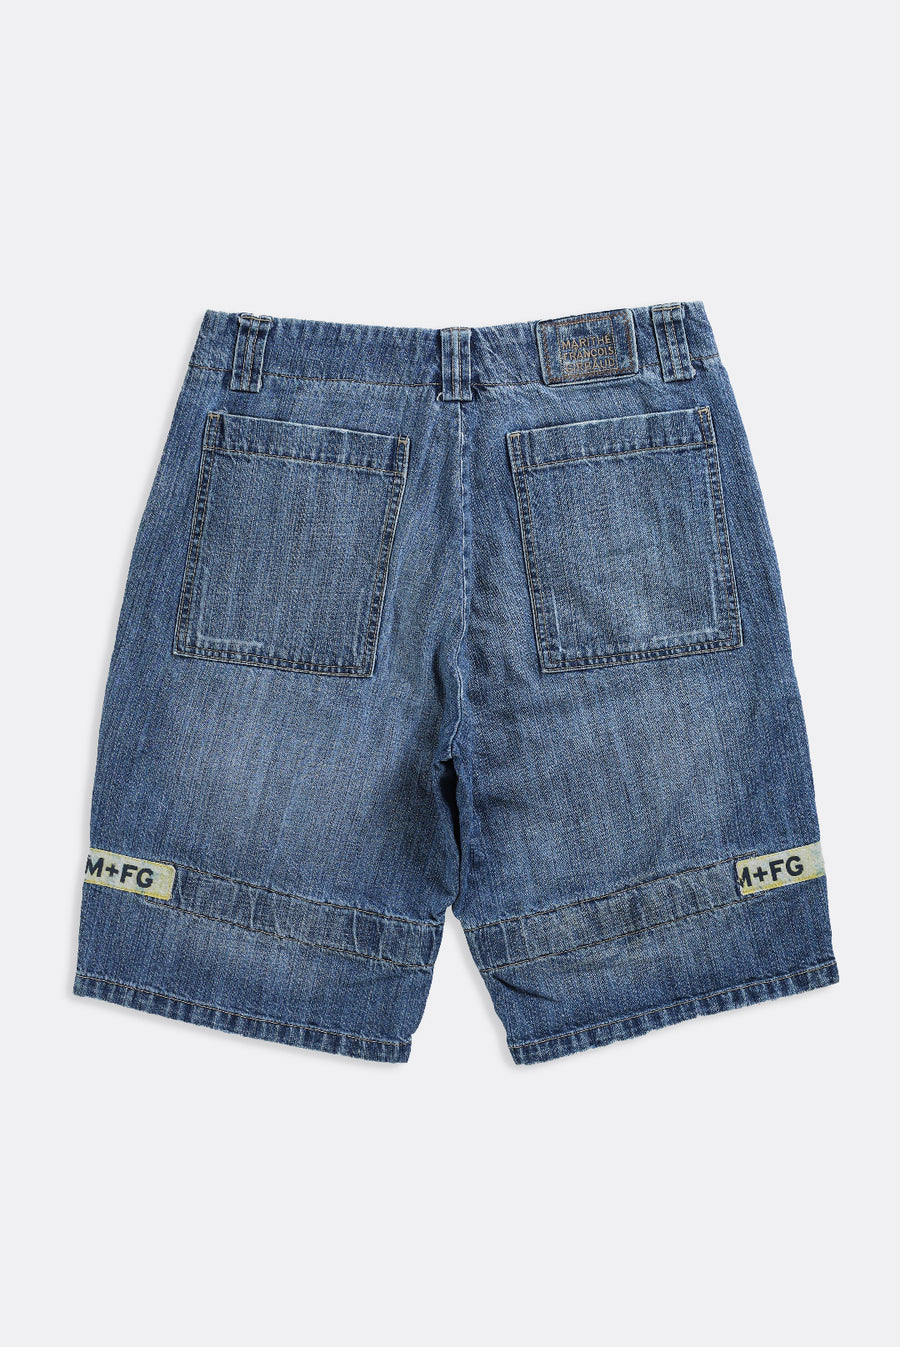 Vintage Girbaud Denim Shorts - W35